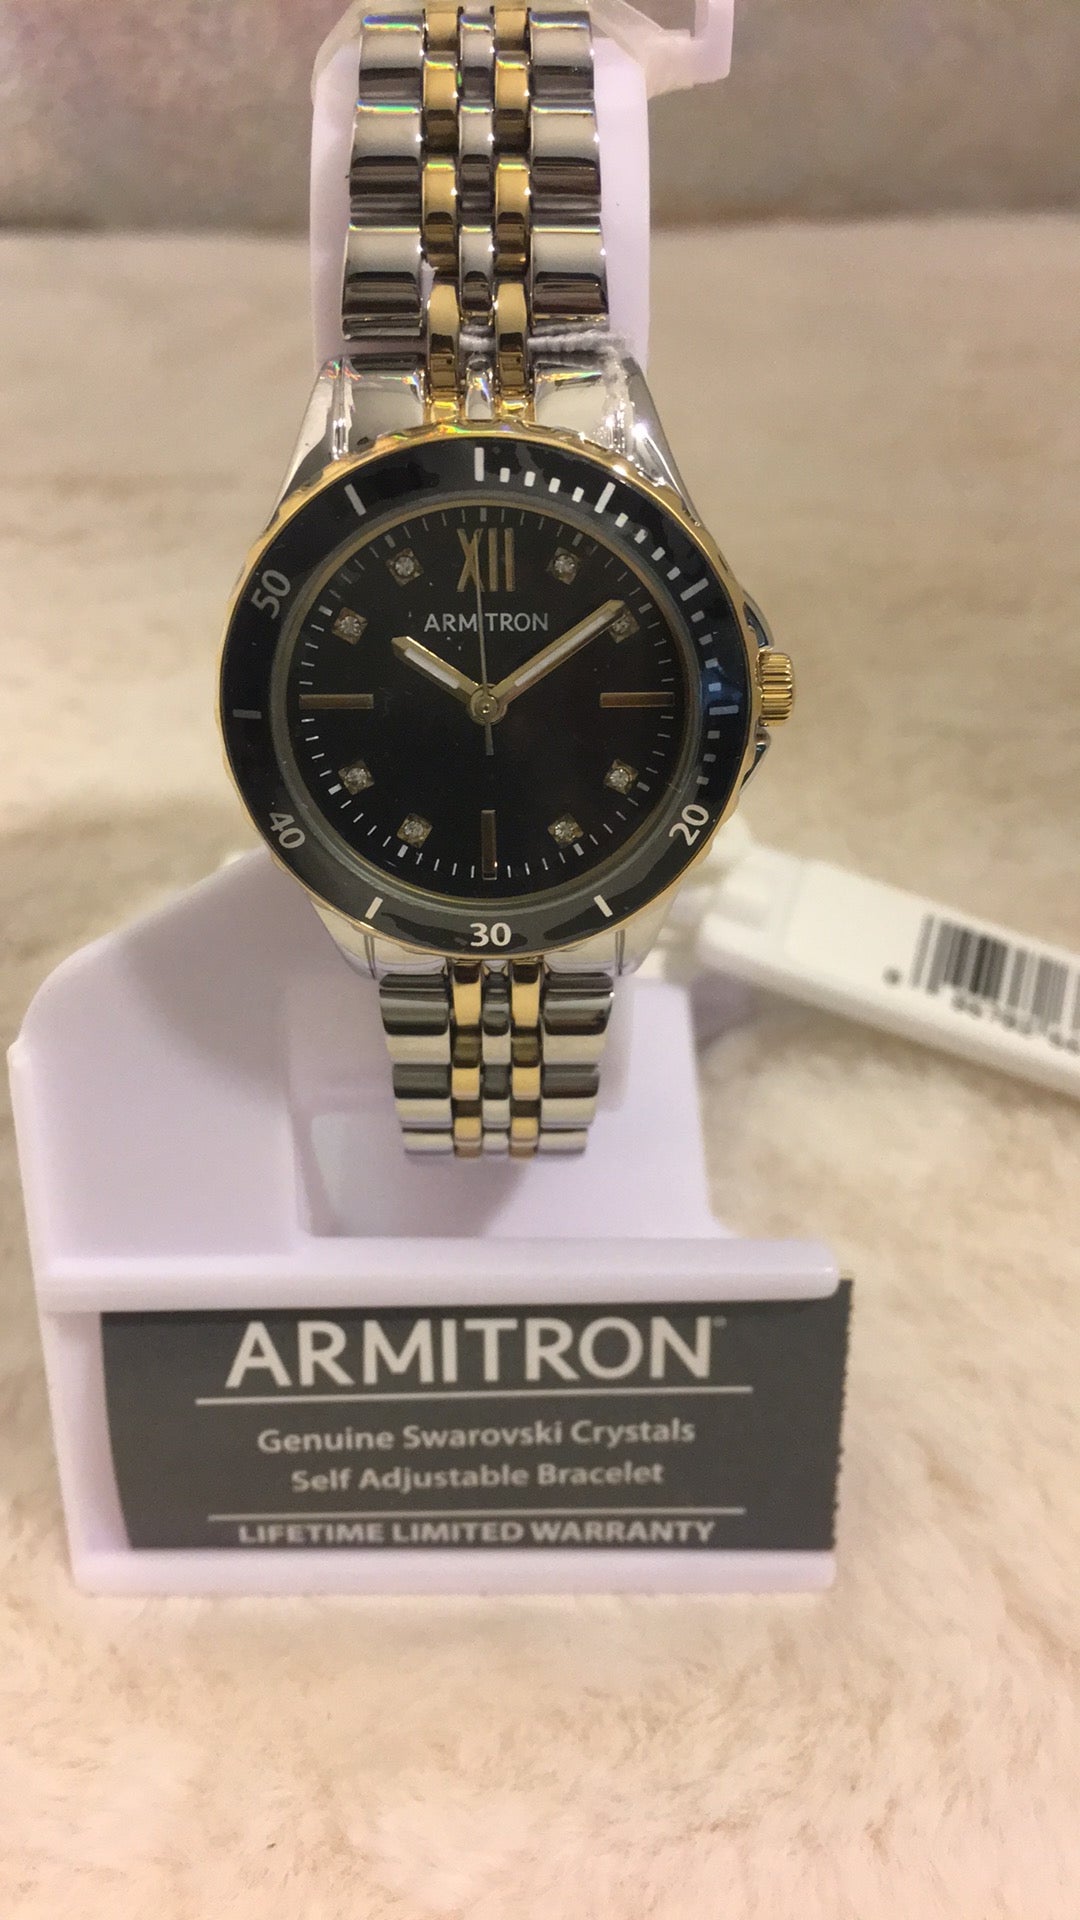 Armitron Self Adjustable Bracelet Watch